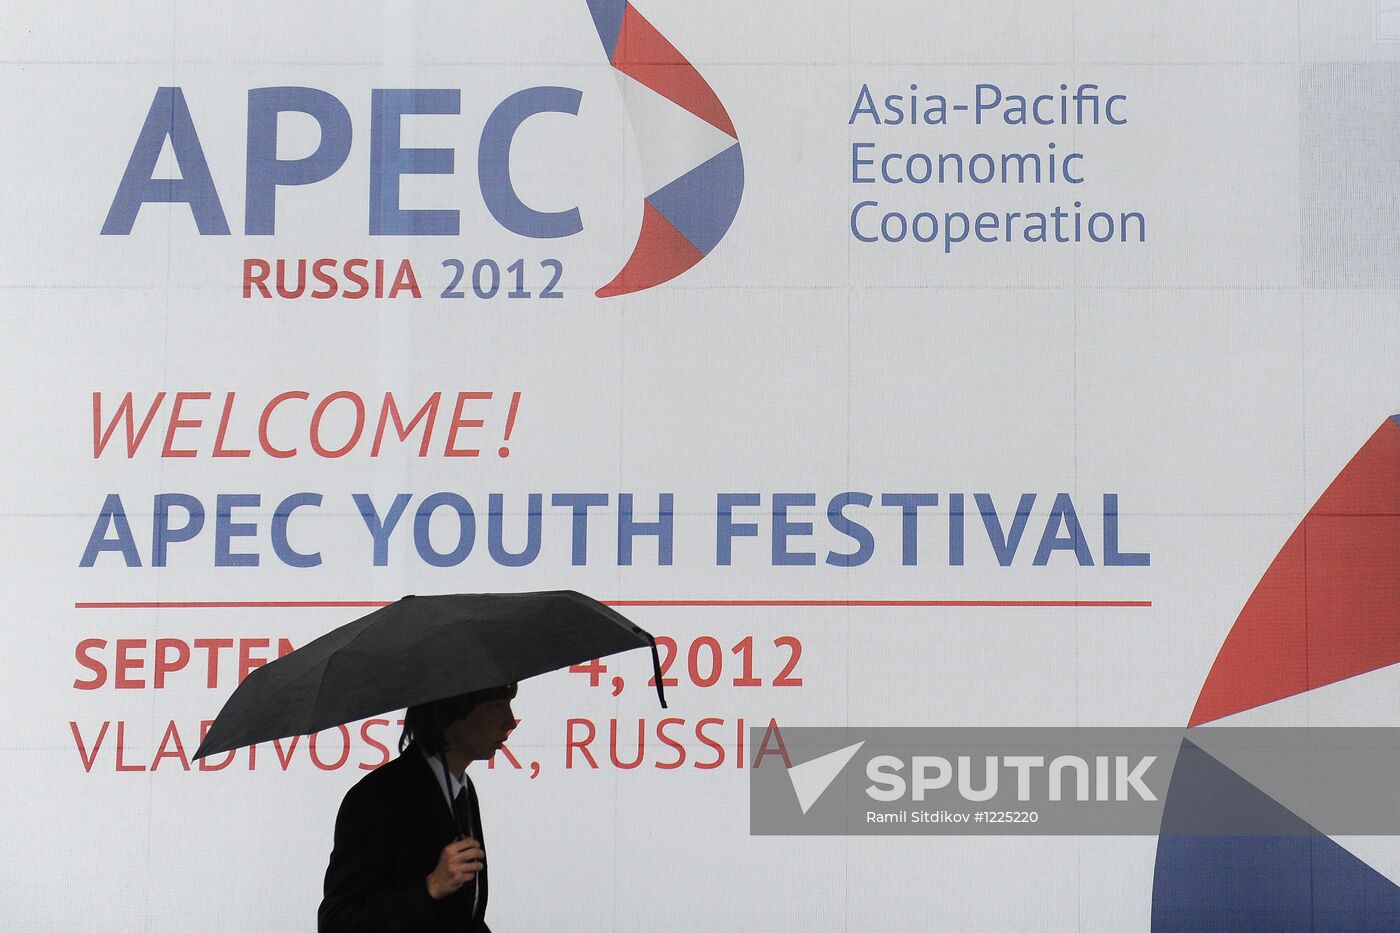 APEC Youth Festival